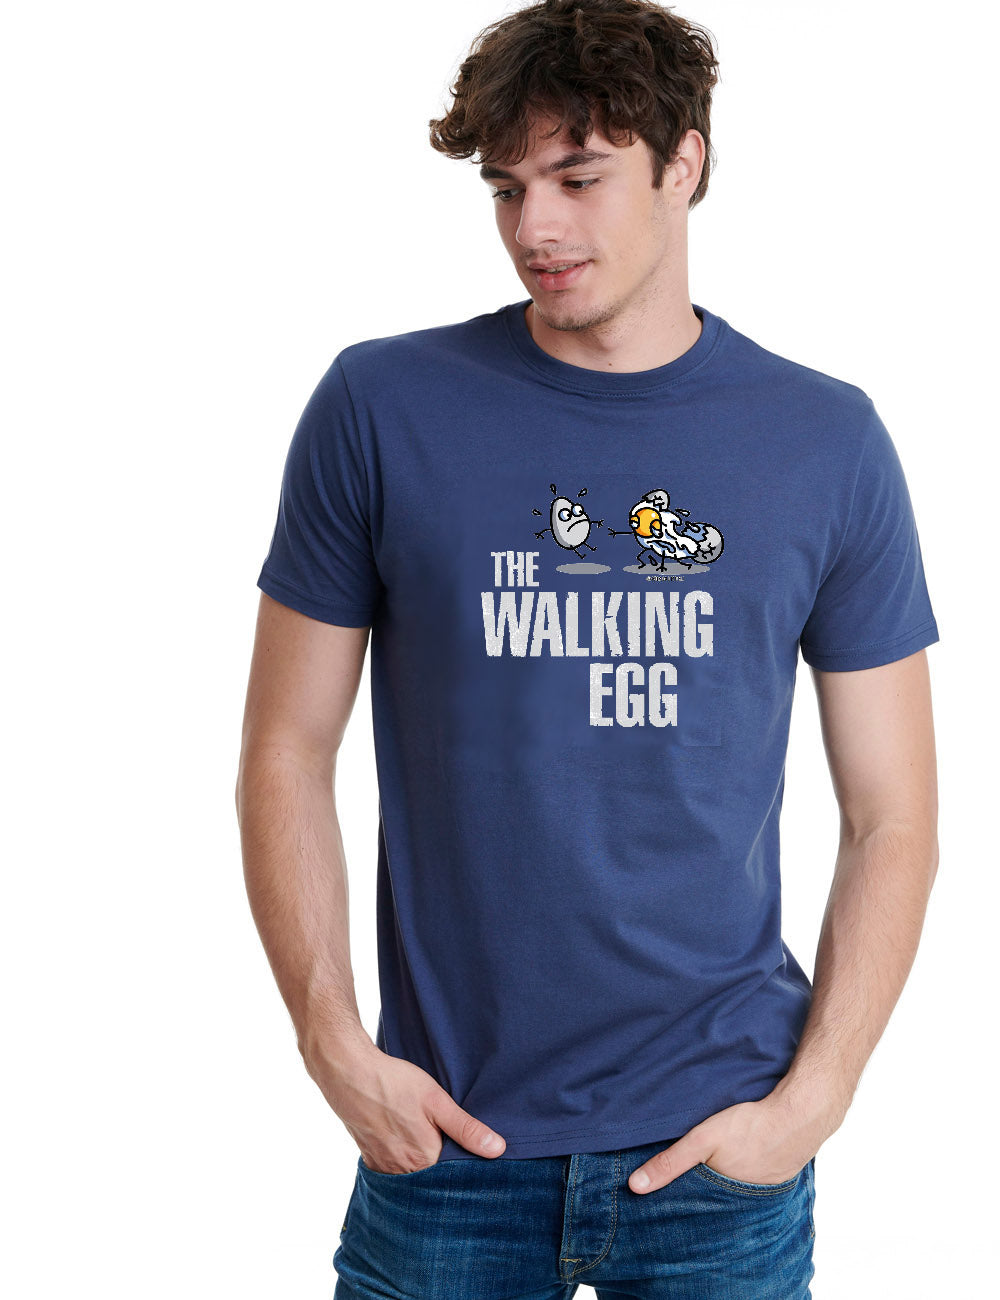 The Walking Egg Mens T-Shirt